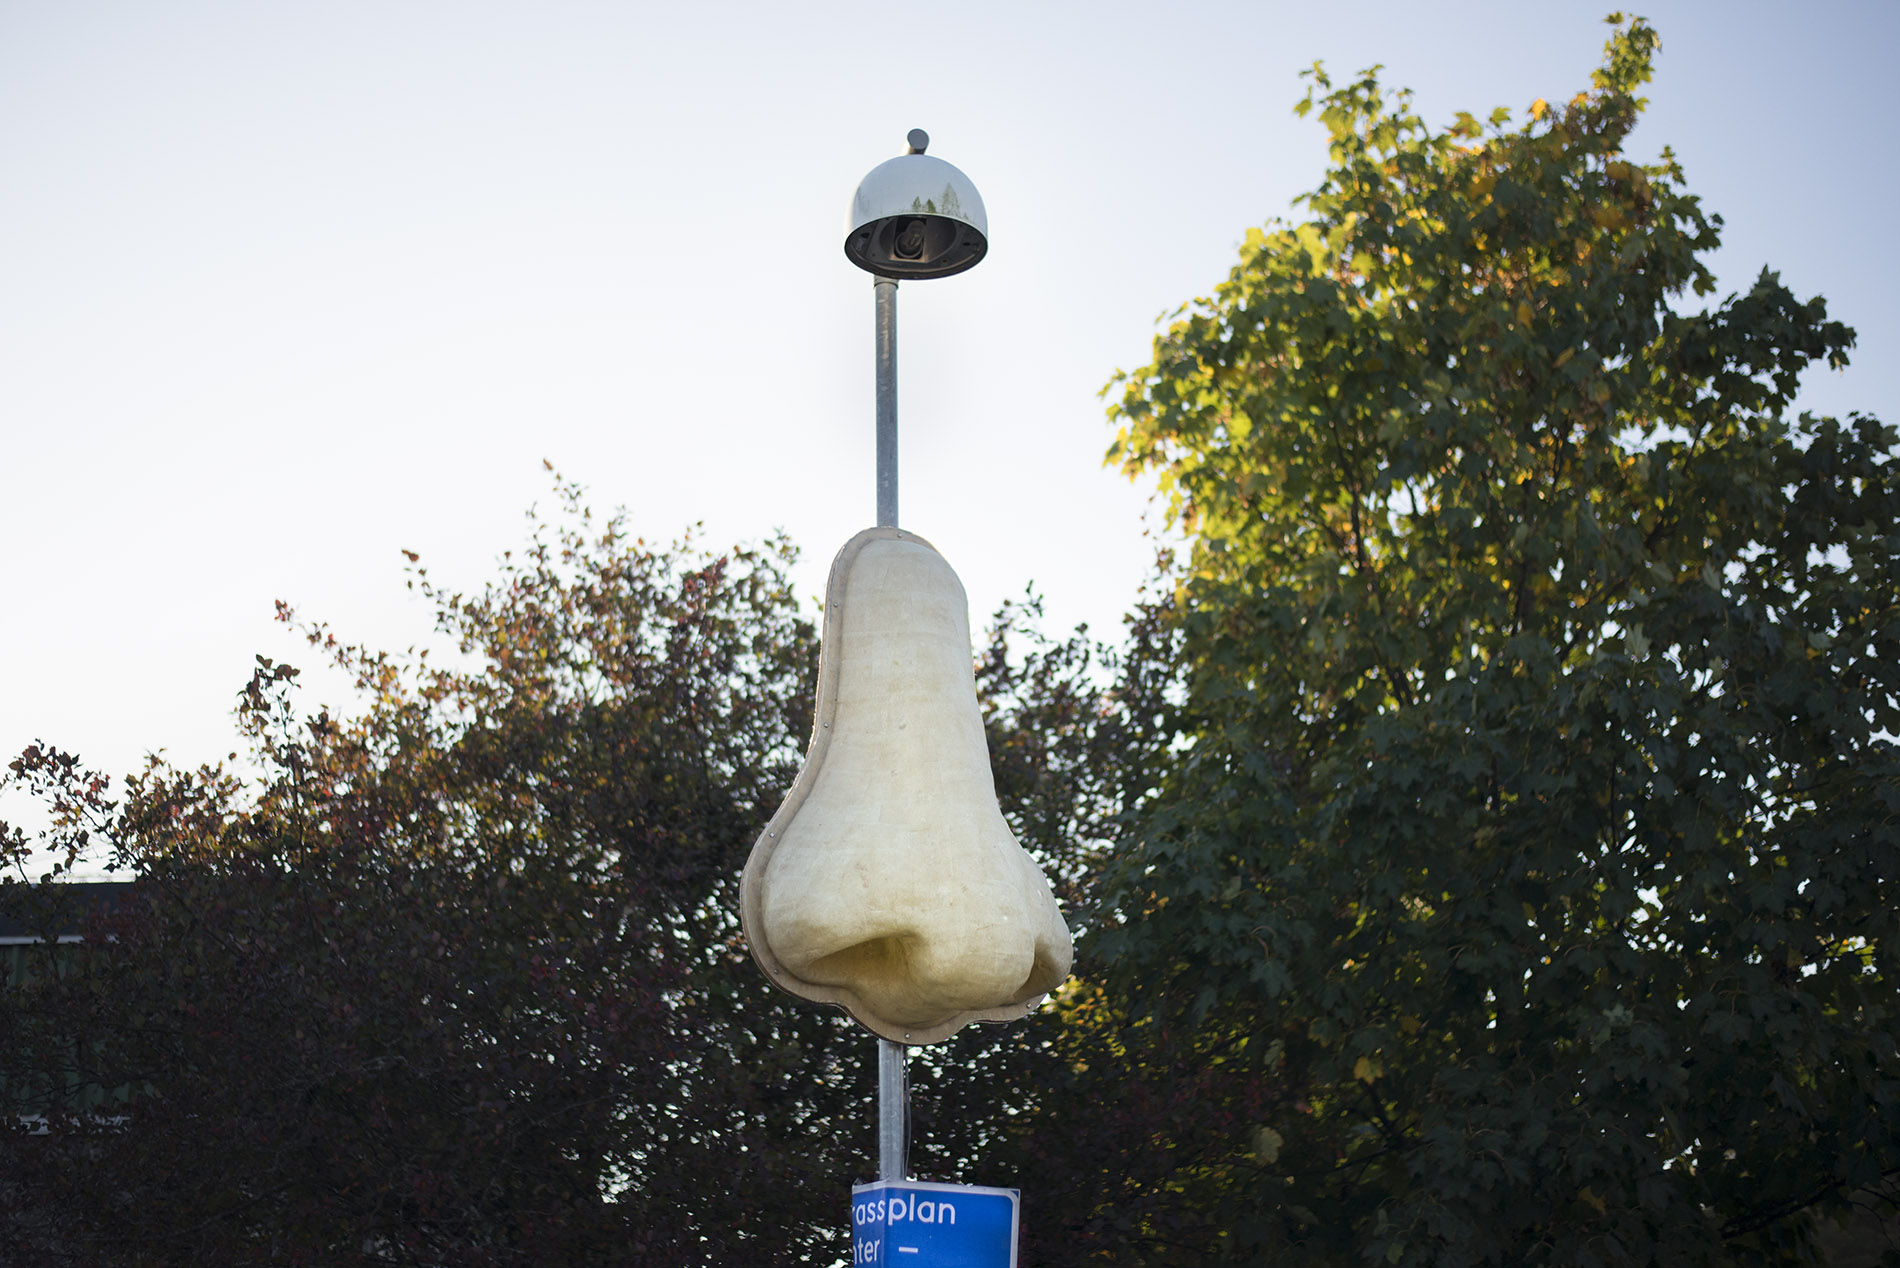 A nose of fiberglass mounted on a pole.